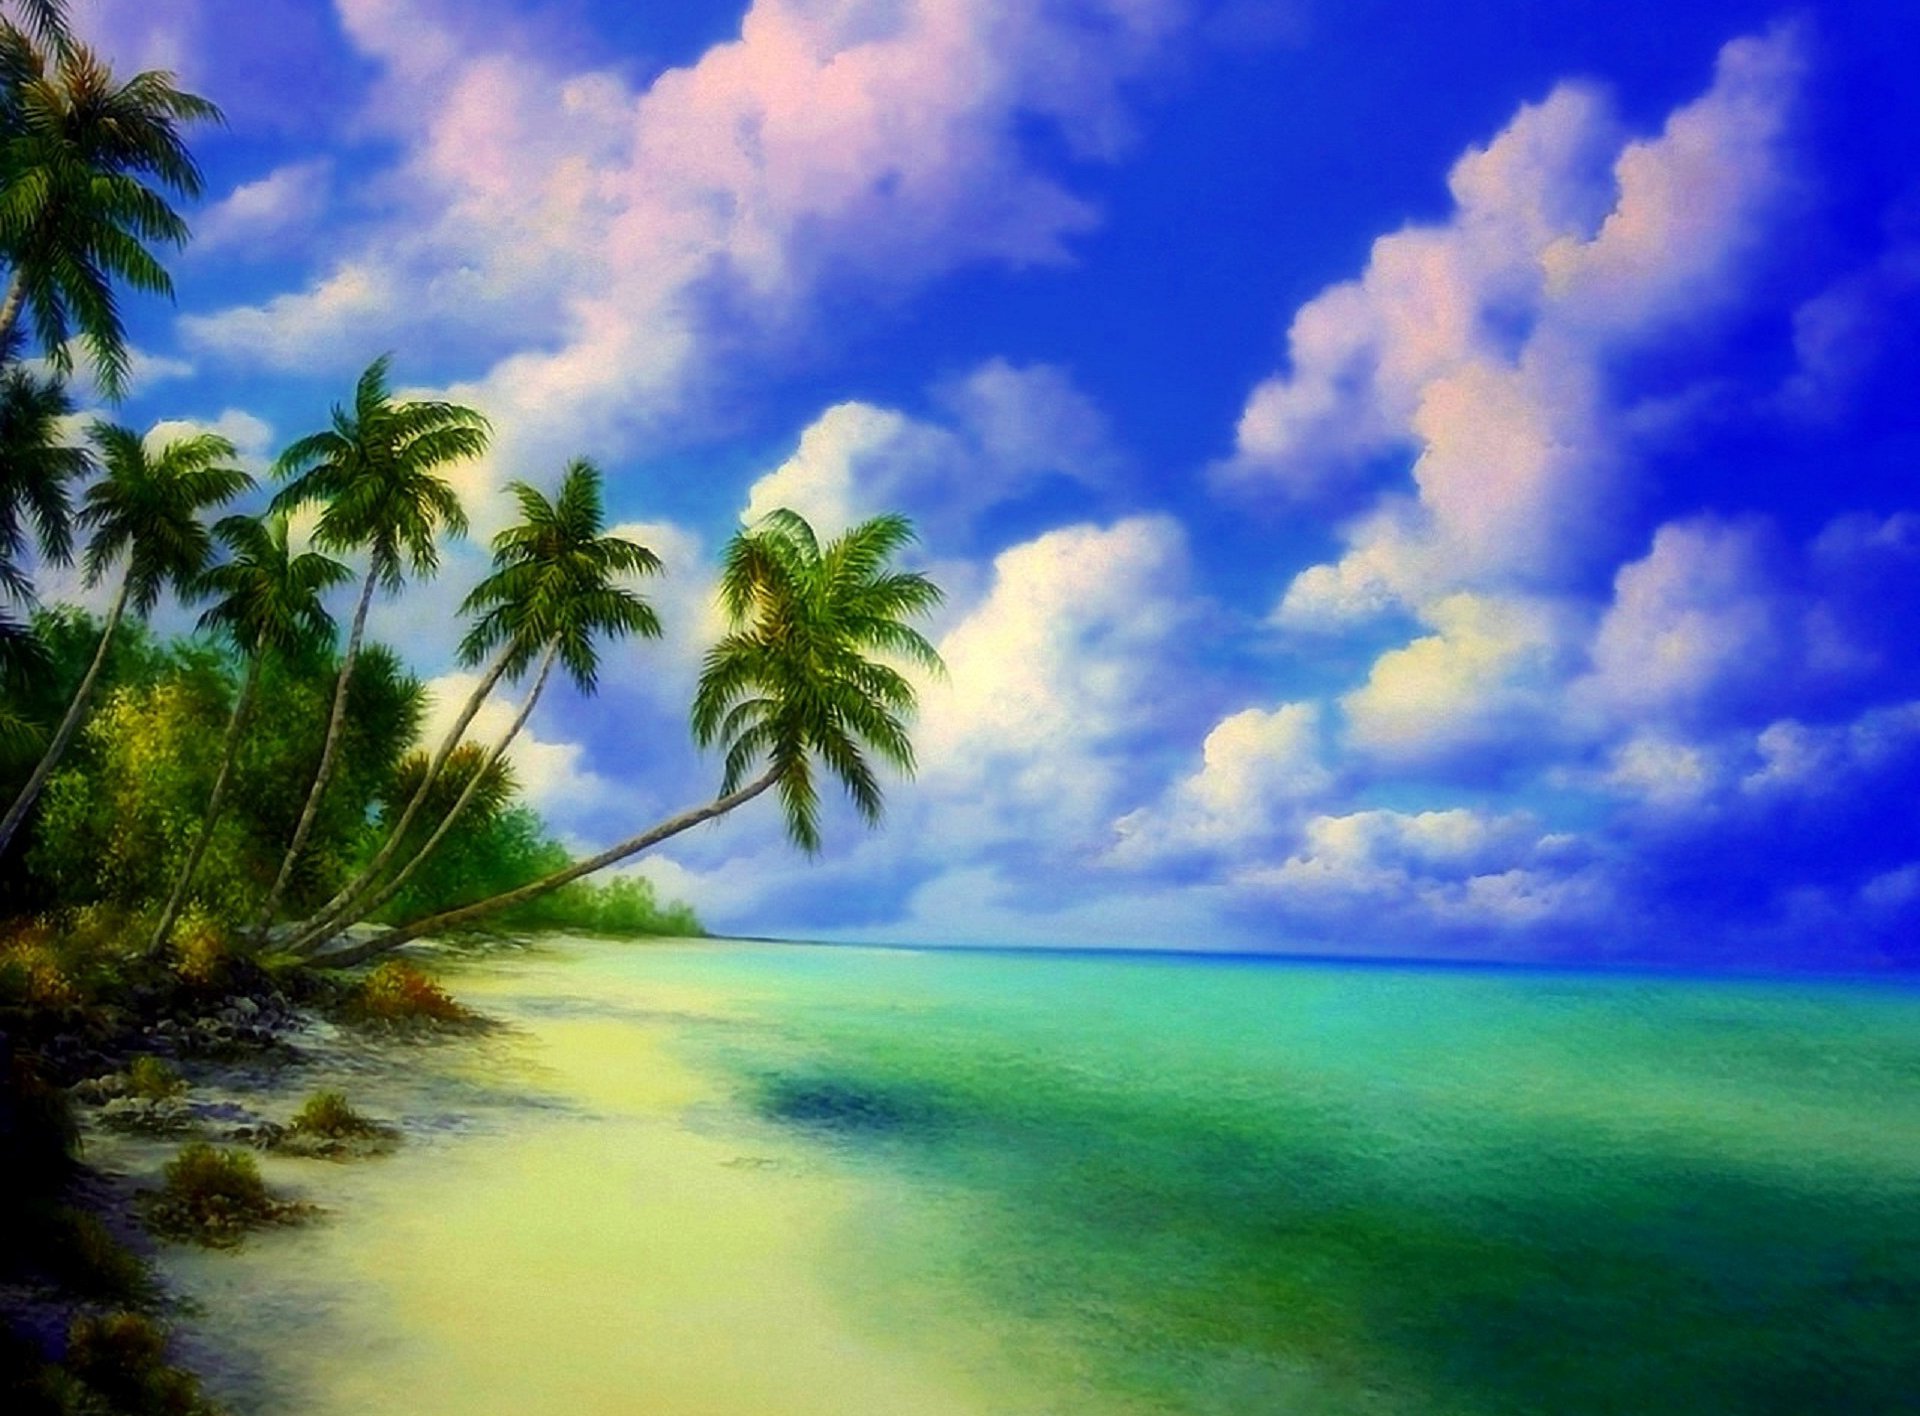 Painting - Tropical Beach